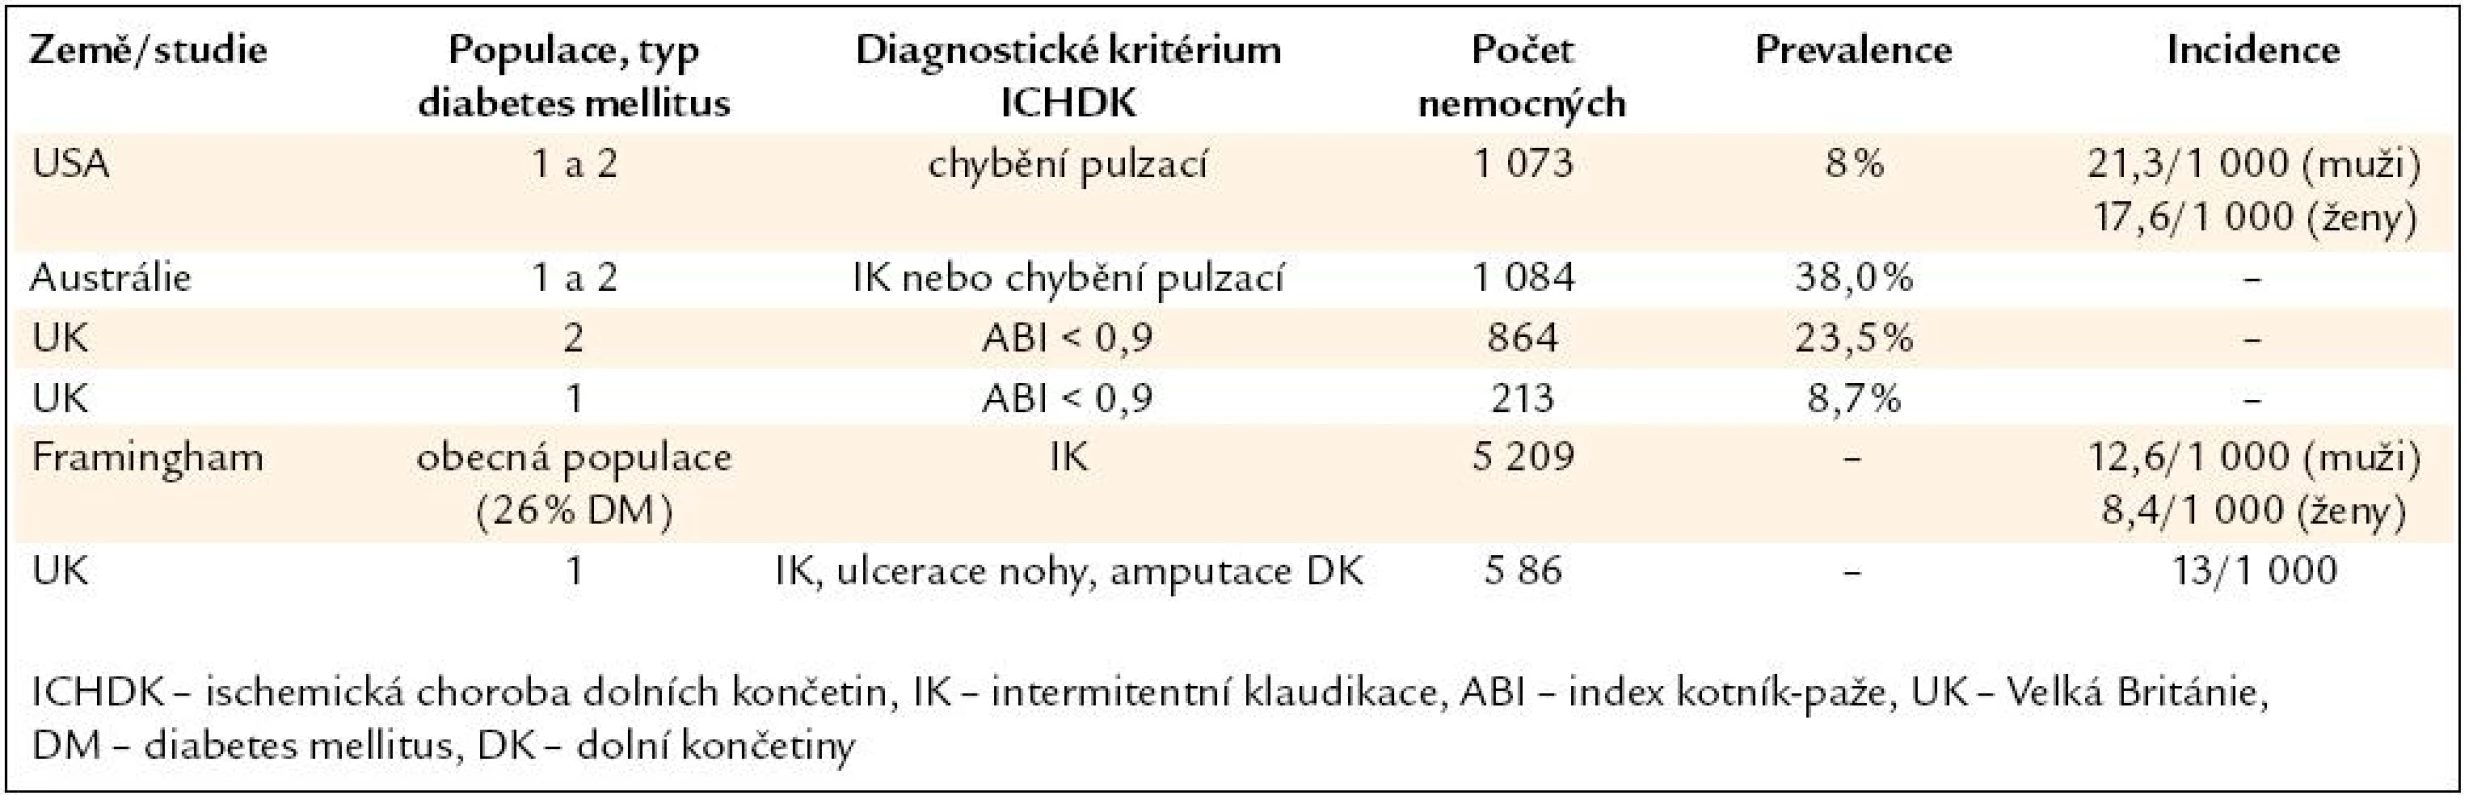 Epidemiologická data o výskytu ICHDK a pacientů s DM [8].